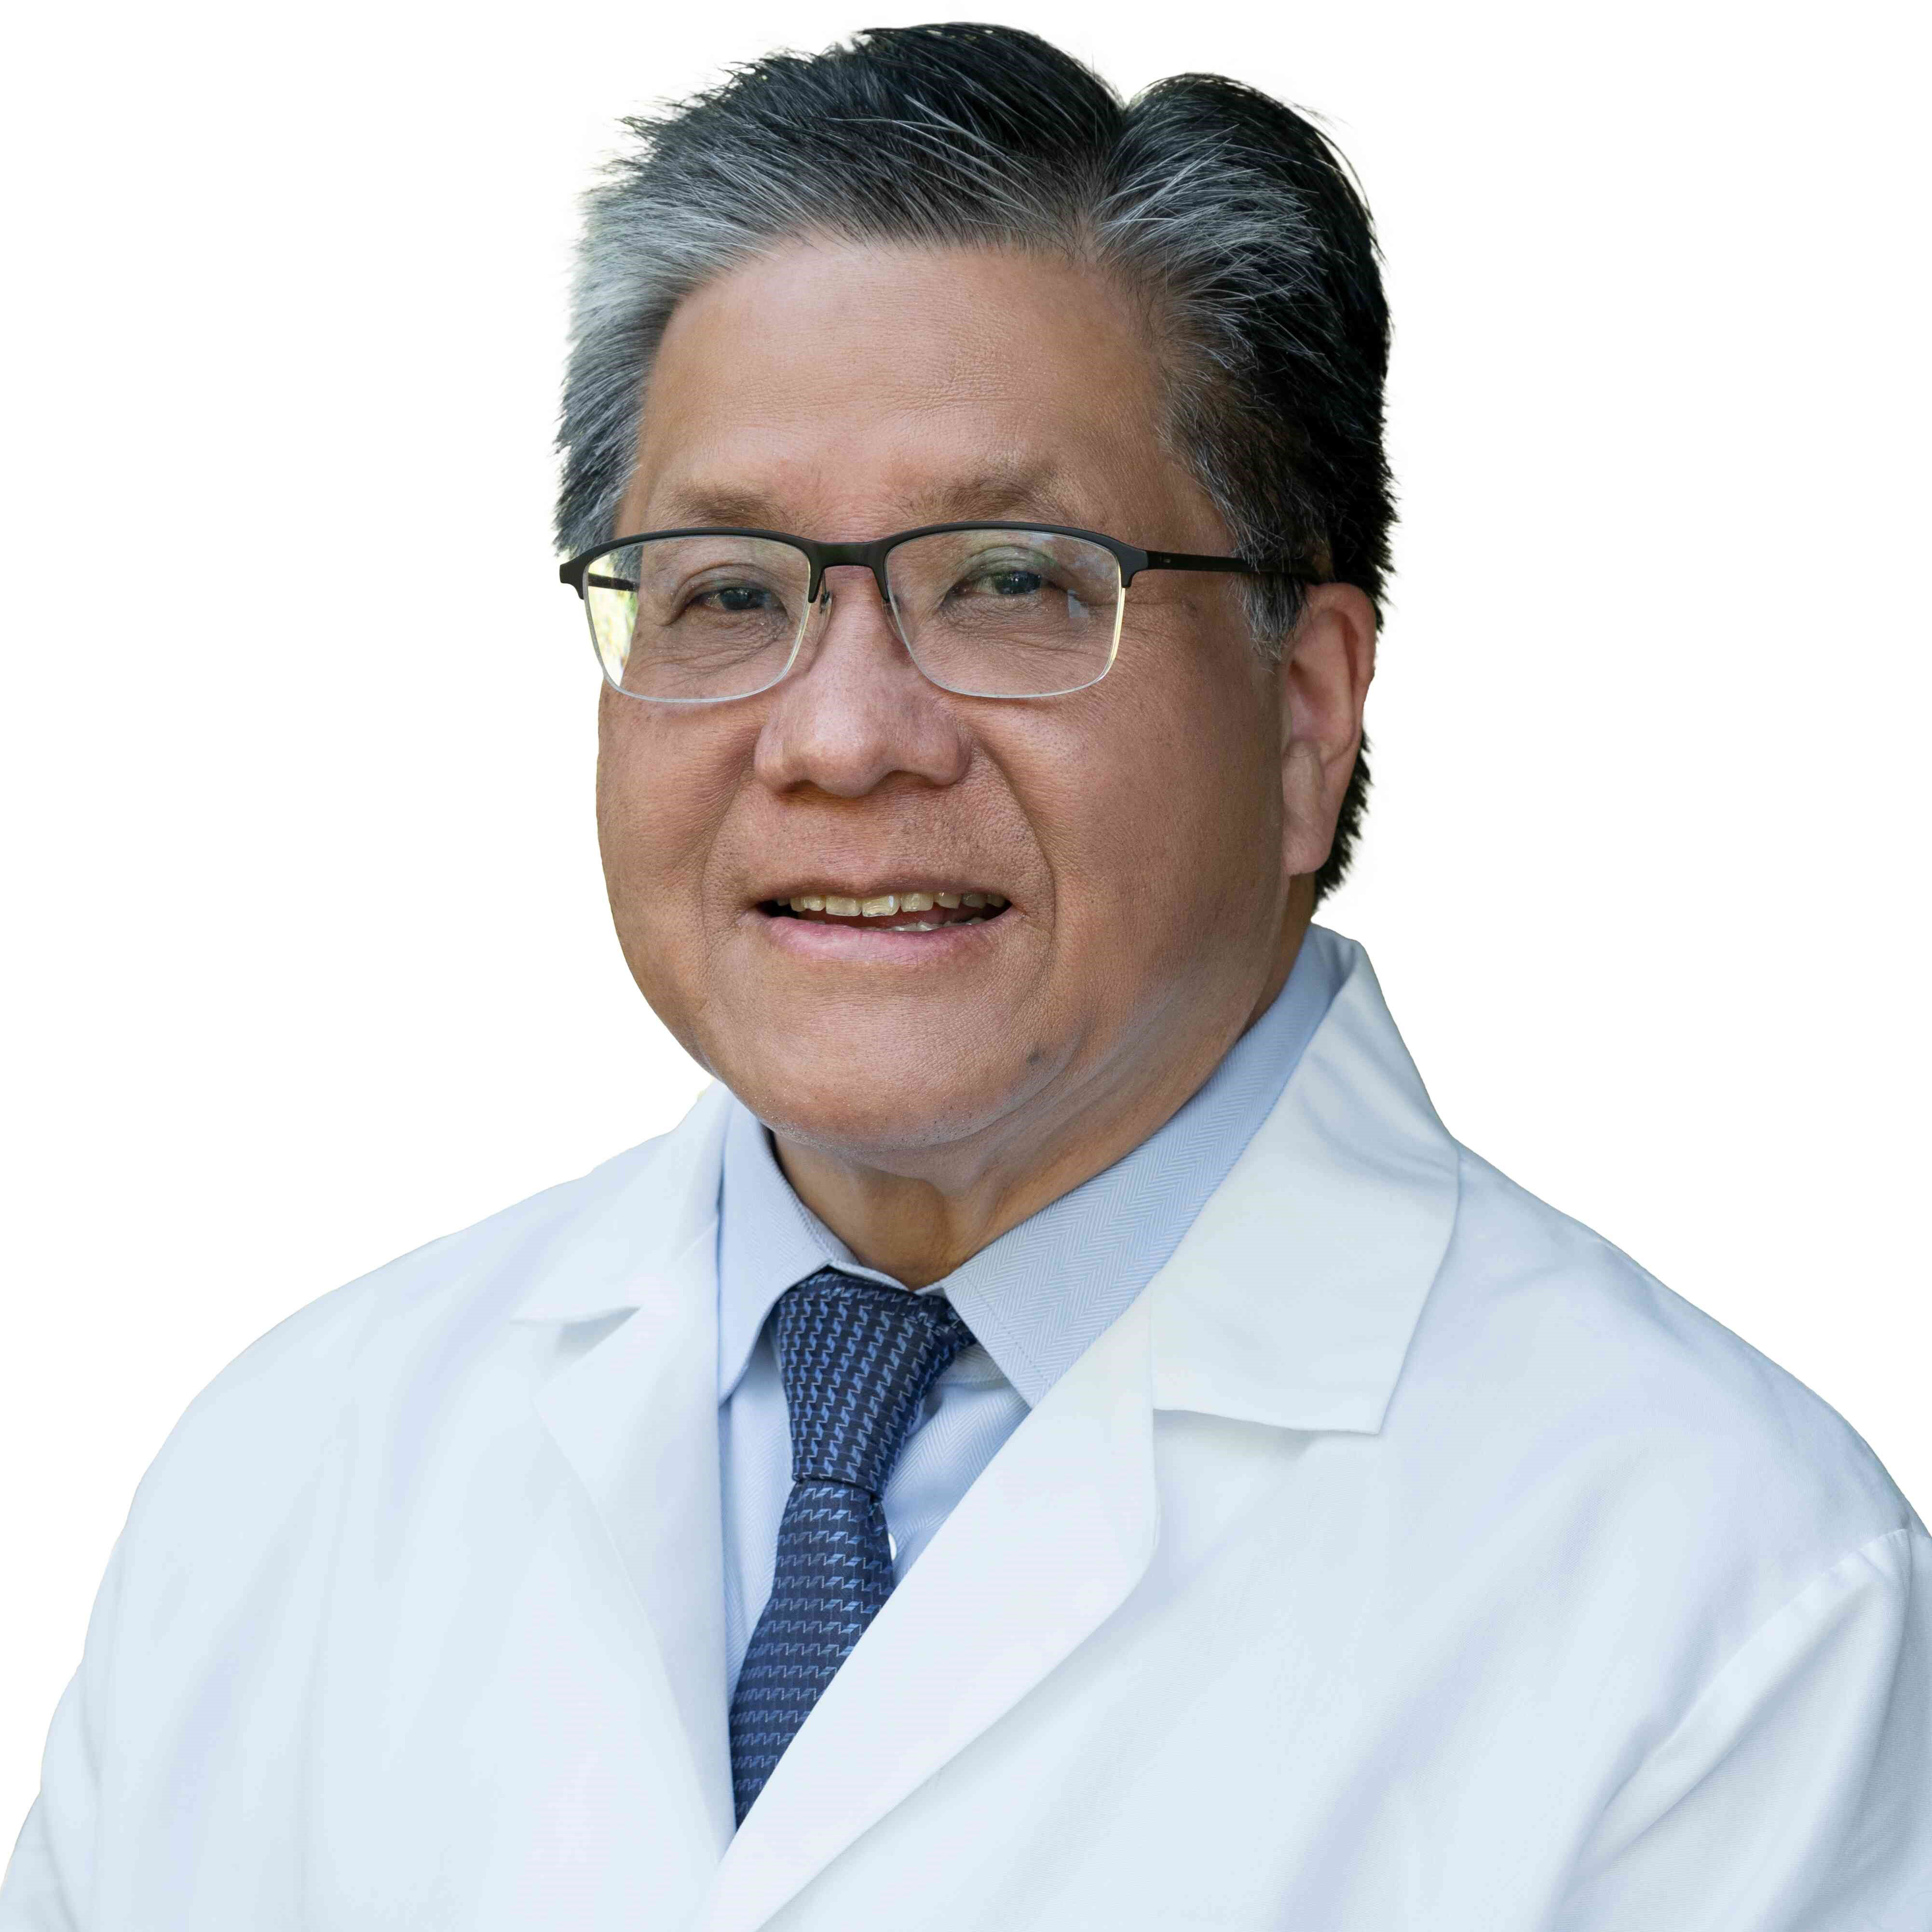 Dr. Jeffrey Wong